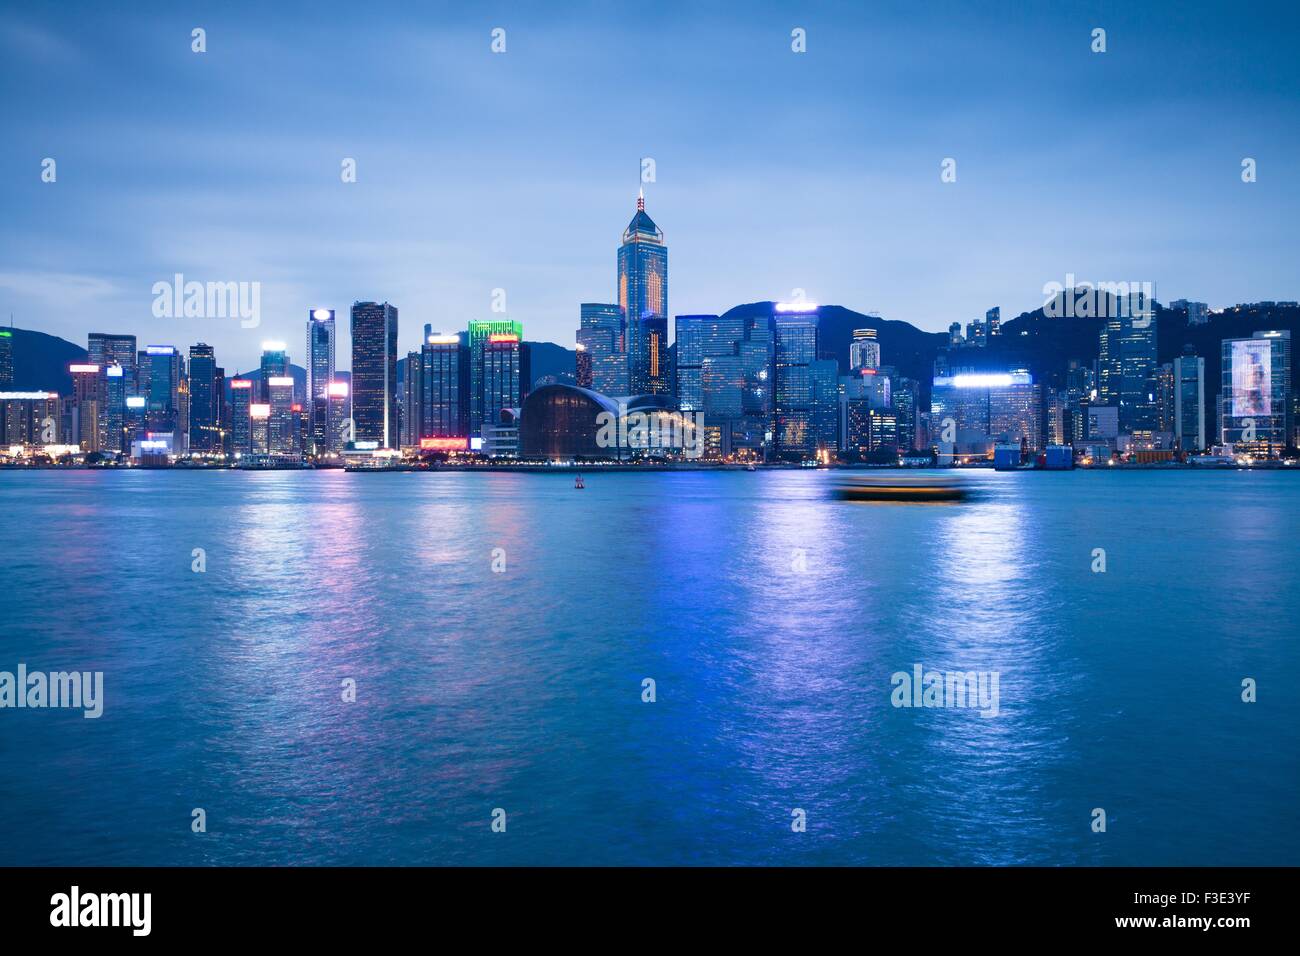 HONG KONG - Feb 19, 2014: vista notturna di Hong Kong a febbraio 19, 2014. Foto Stock